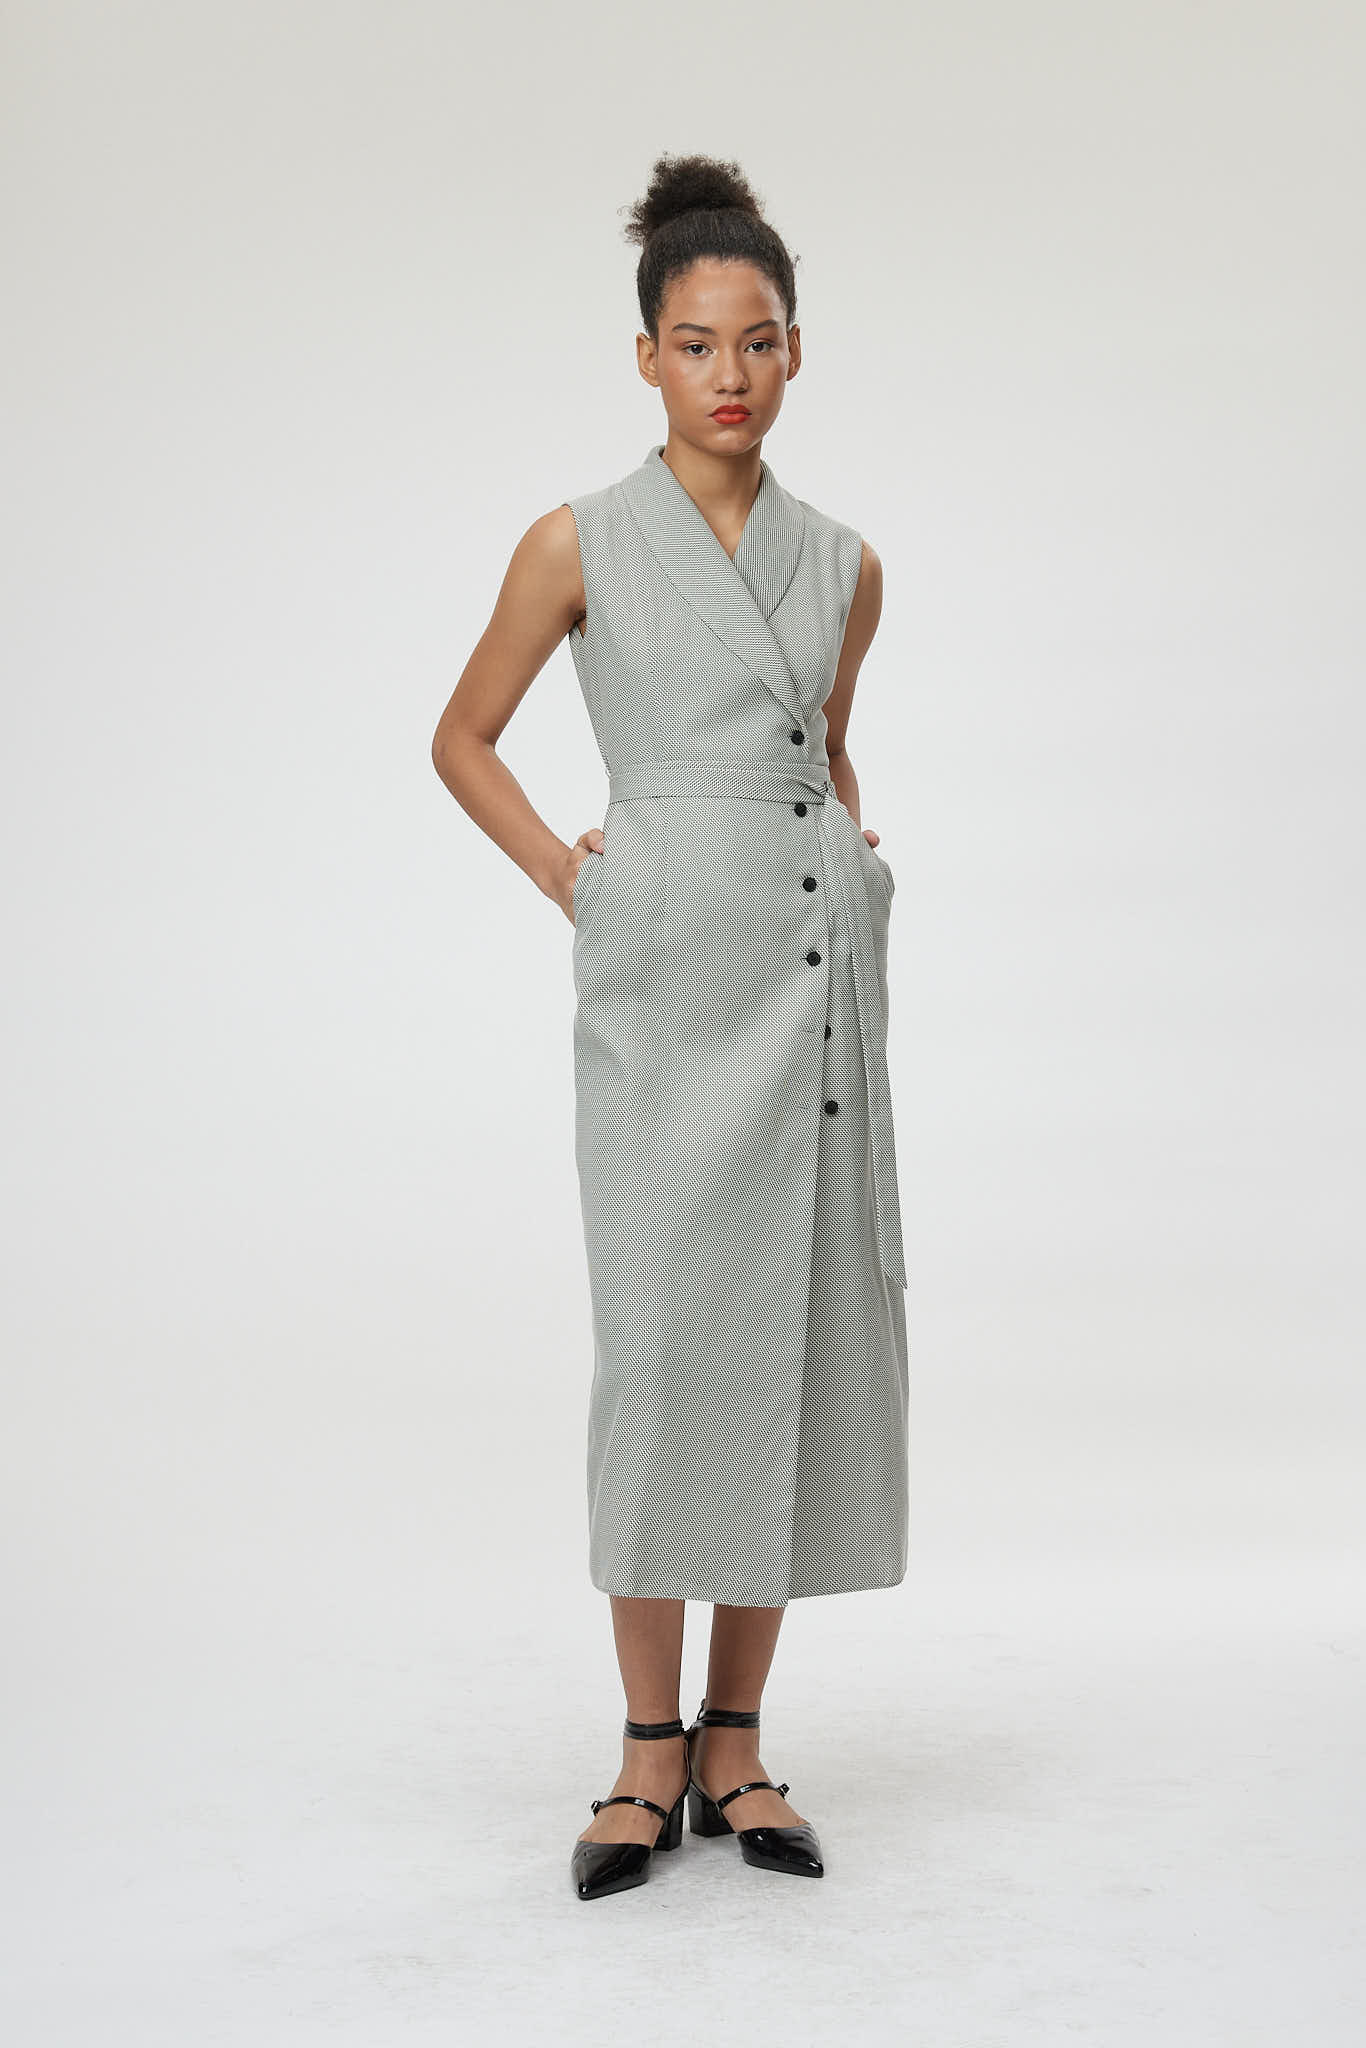 Genoa Dress – Maxi wrap dress in black & white